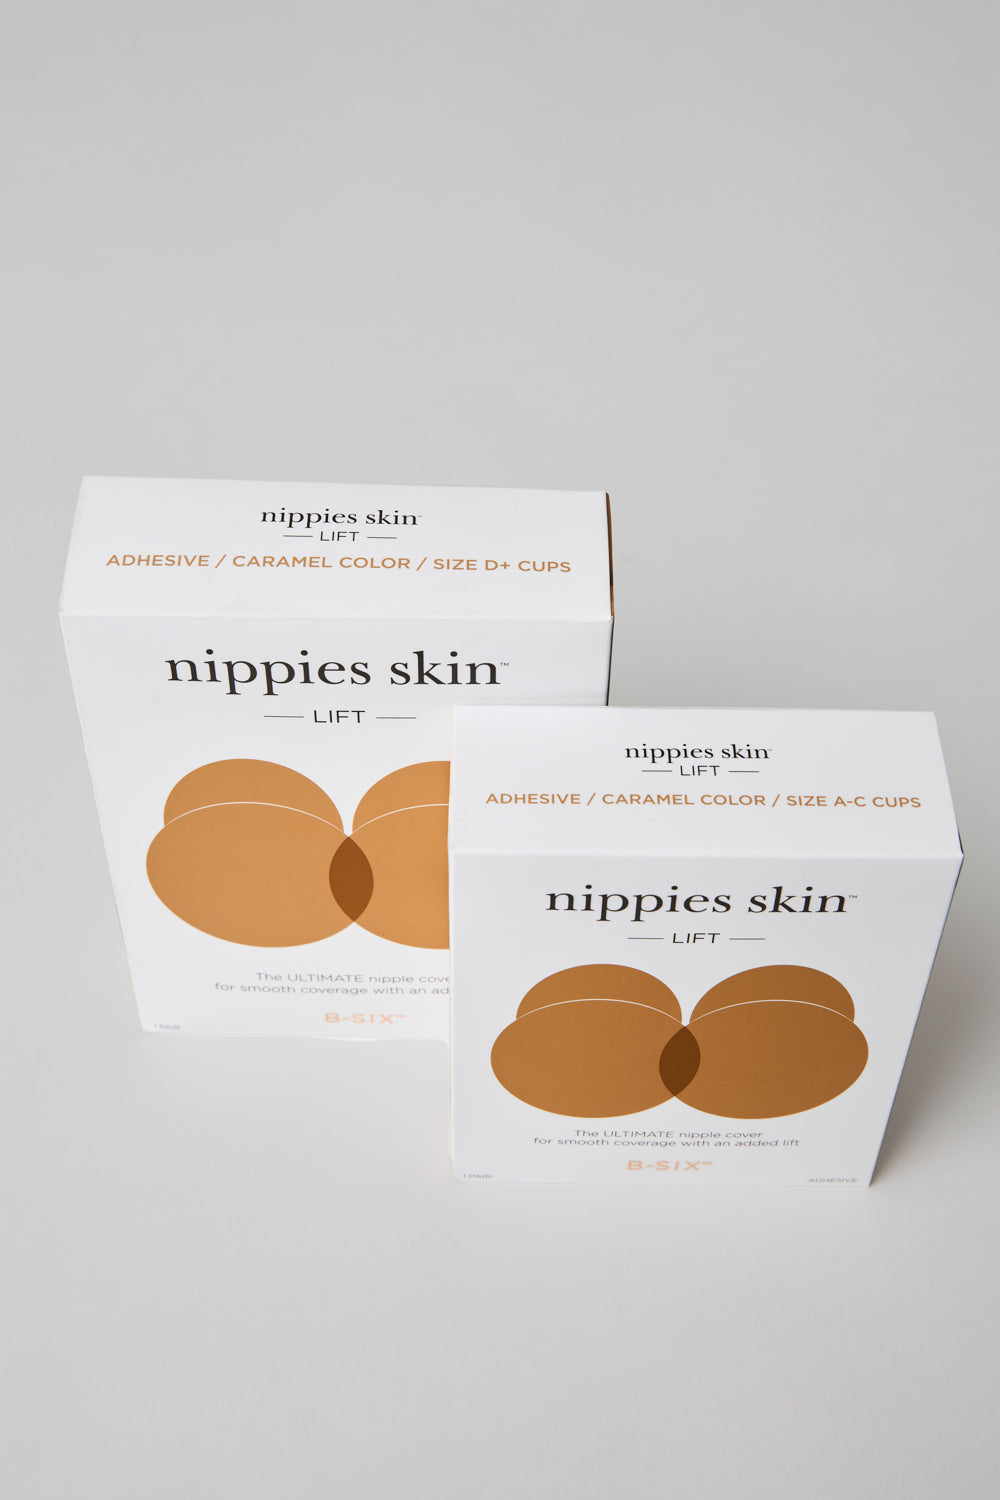 B-SIX Nippies Skin Lifts Créme Sz.1 Petals